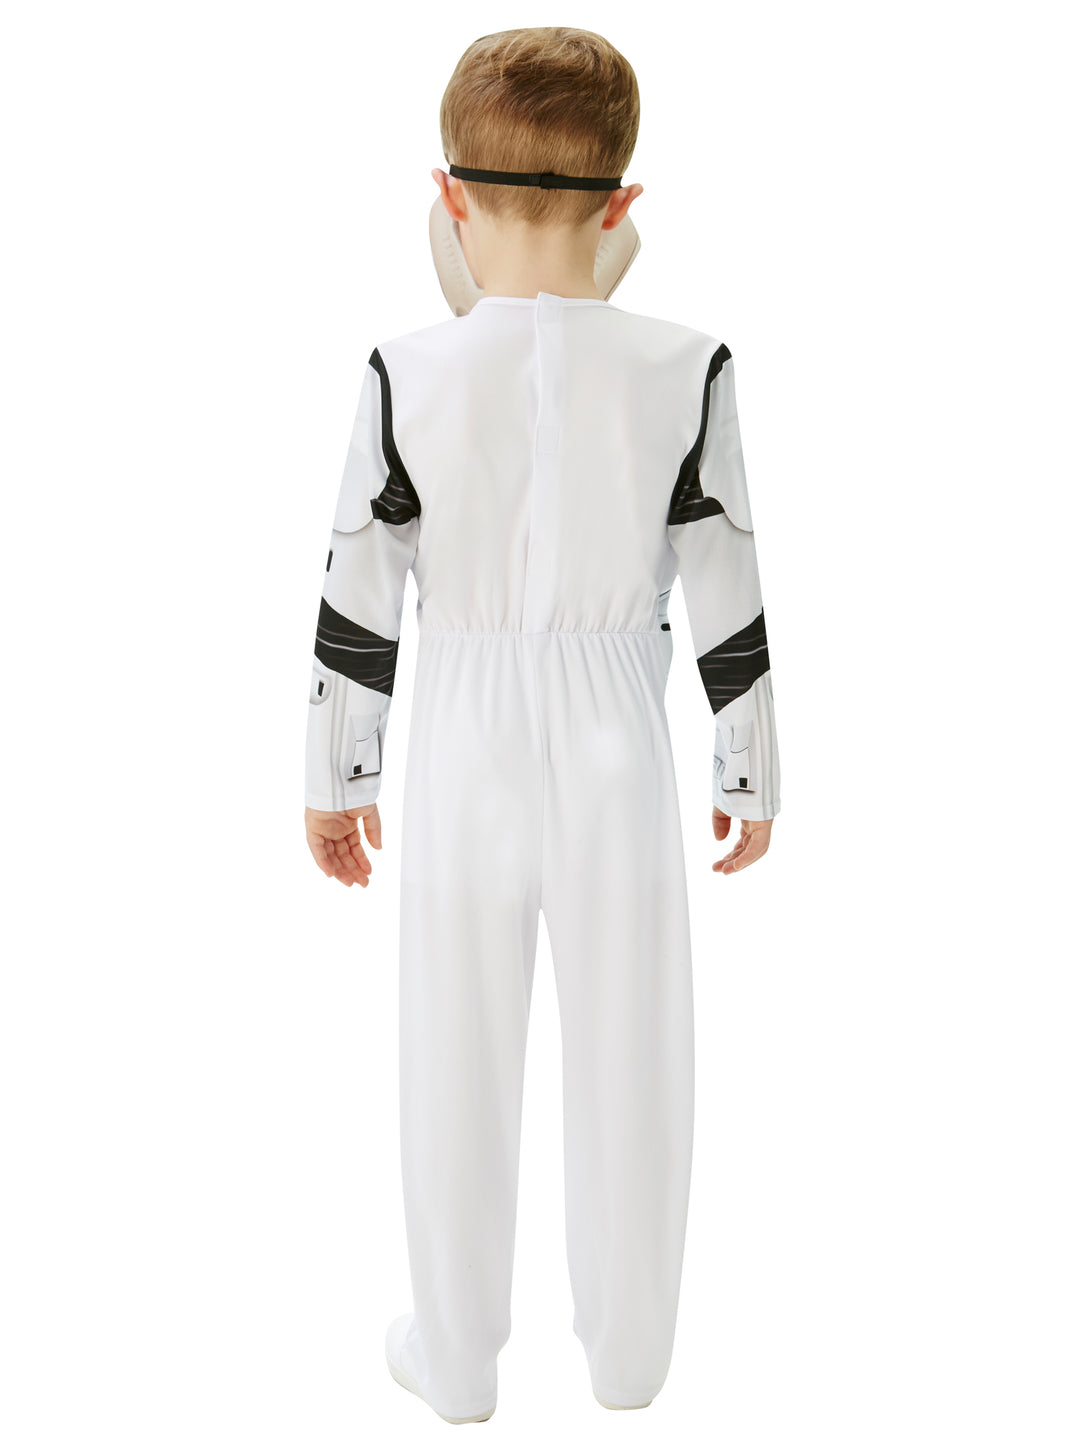 First Order Stormtrooper Kids Costume Deluxe